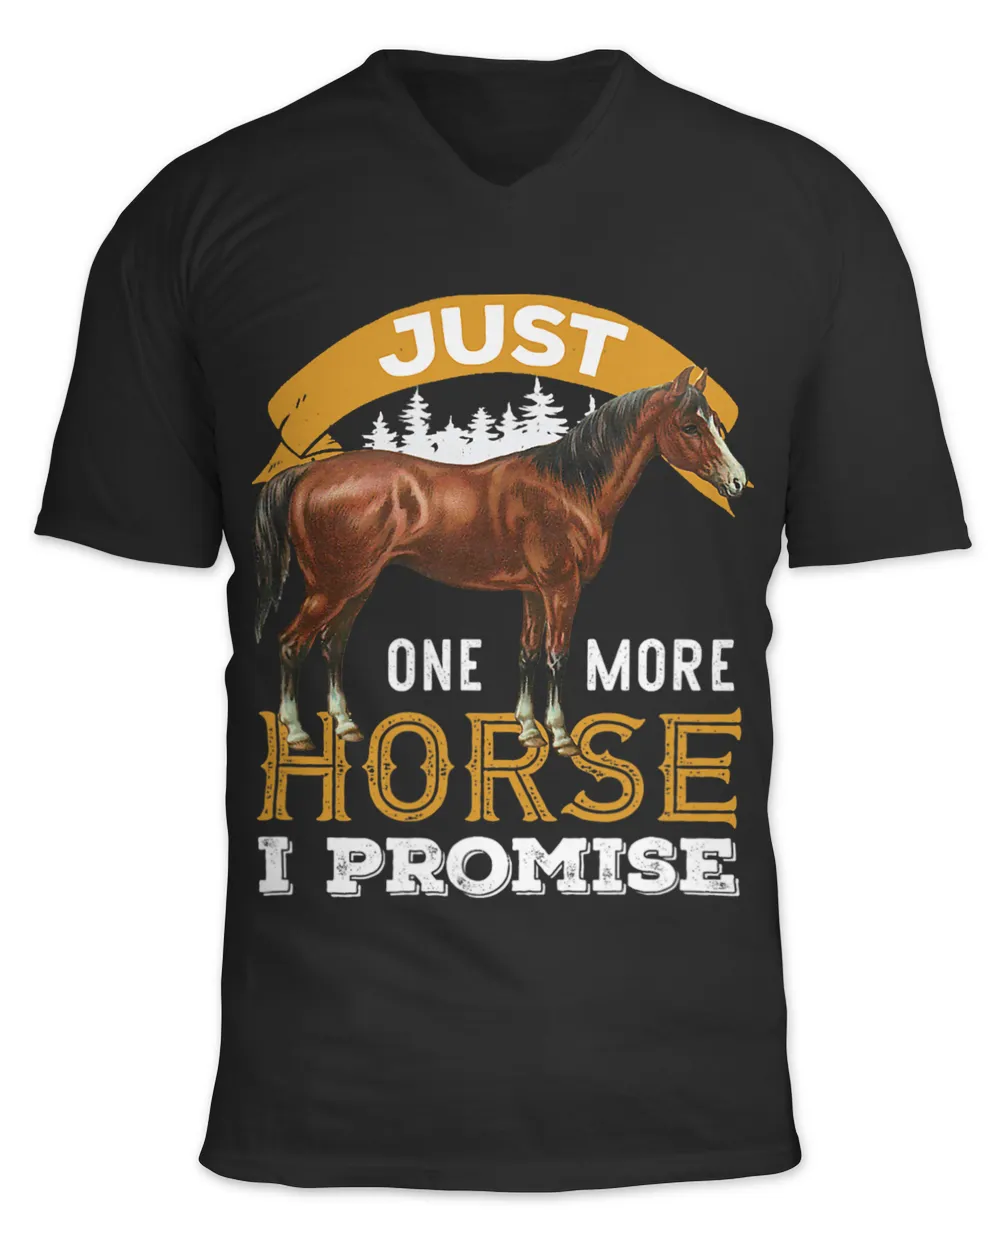 Just one more horse I promise funny design for women men